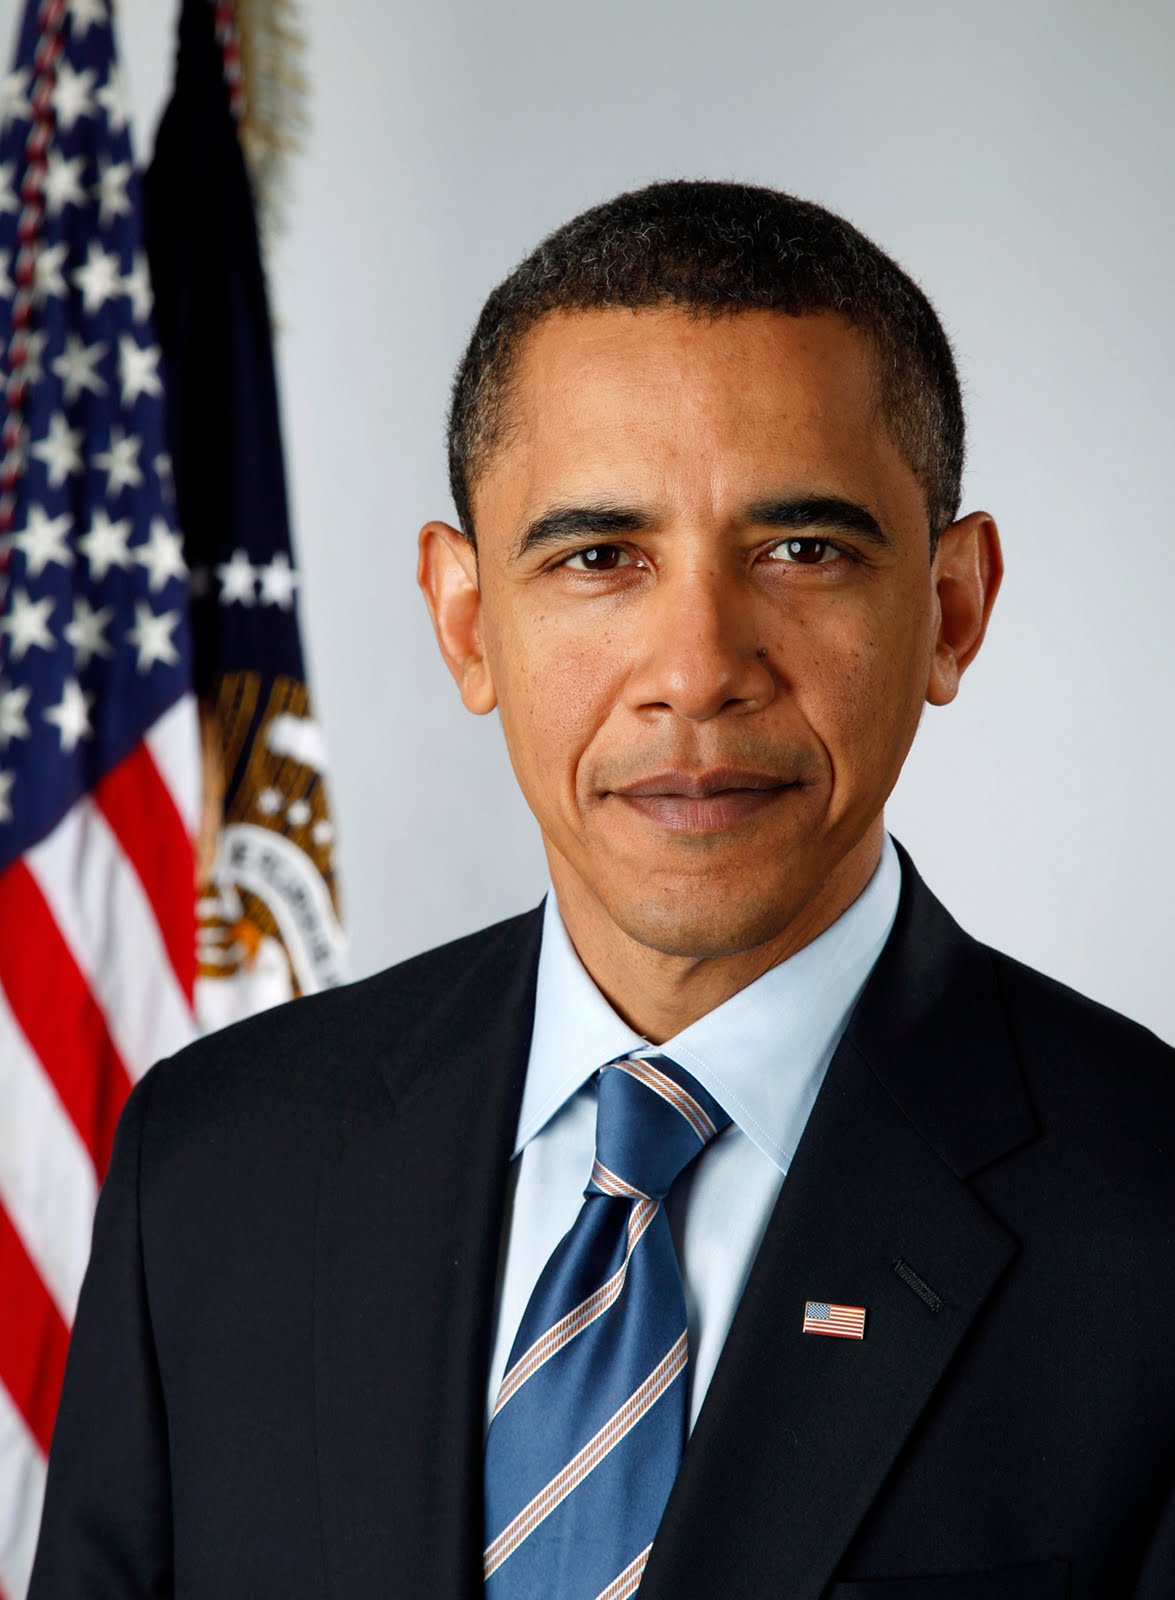 http://1.bp.blogspot.com/-ueaUH_grT48/TzHmxFK-XbI/AAAAAAAAM-M/xMAPLR_GVp8/s1600/Barack+Obama+Funny+Picture+(9).jpg